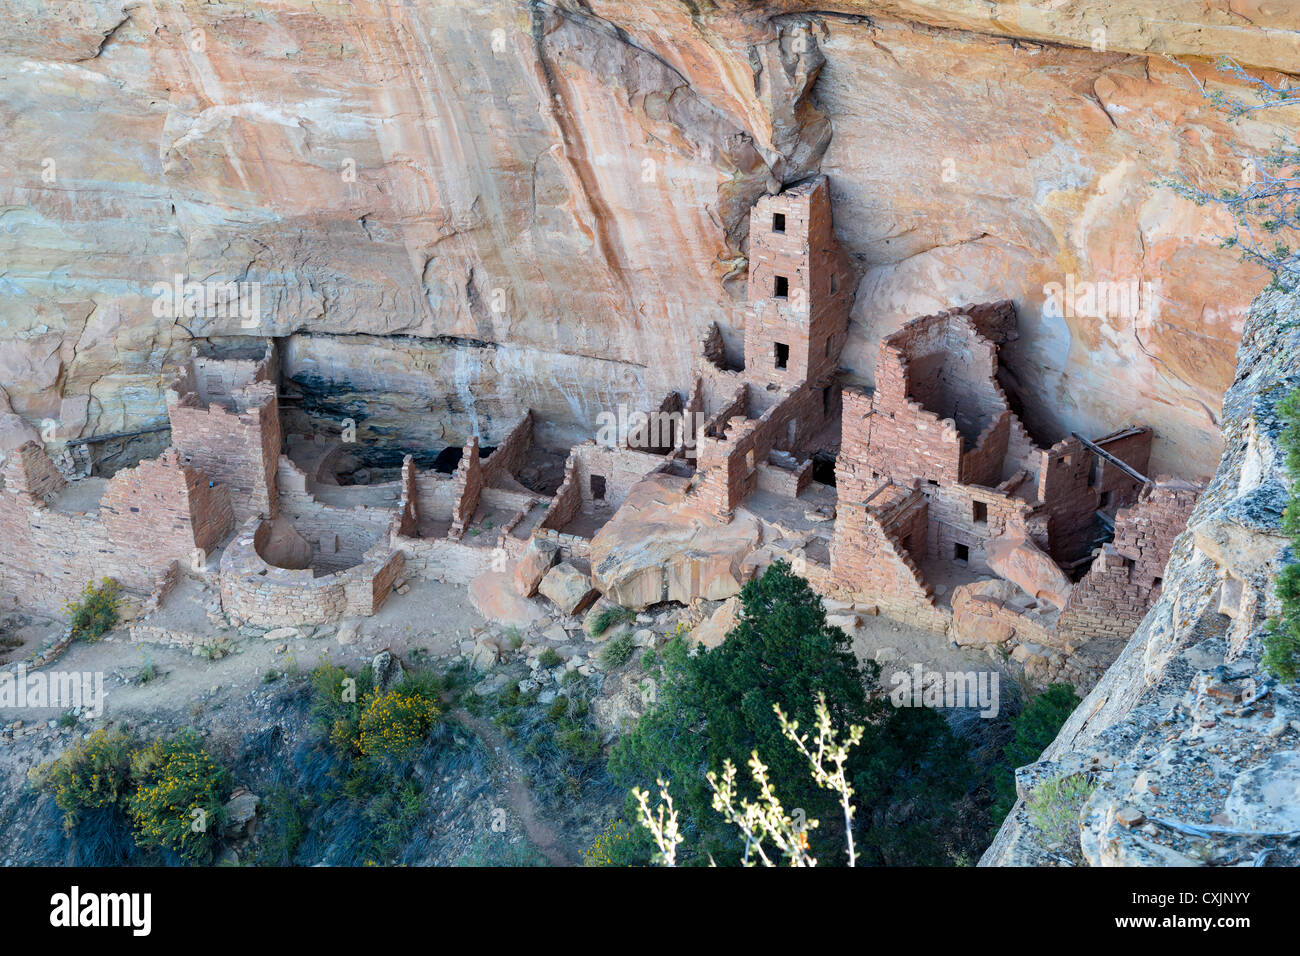 Ancient Indian Ruins at Square Tower House in Navajo Canyon, Mesa Verde National Park, near Cortez, Colorado USA Stock Photo